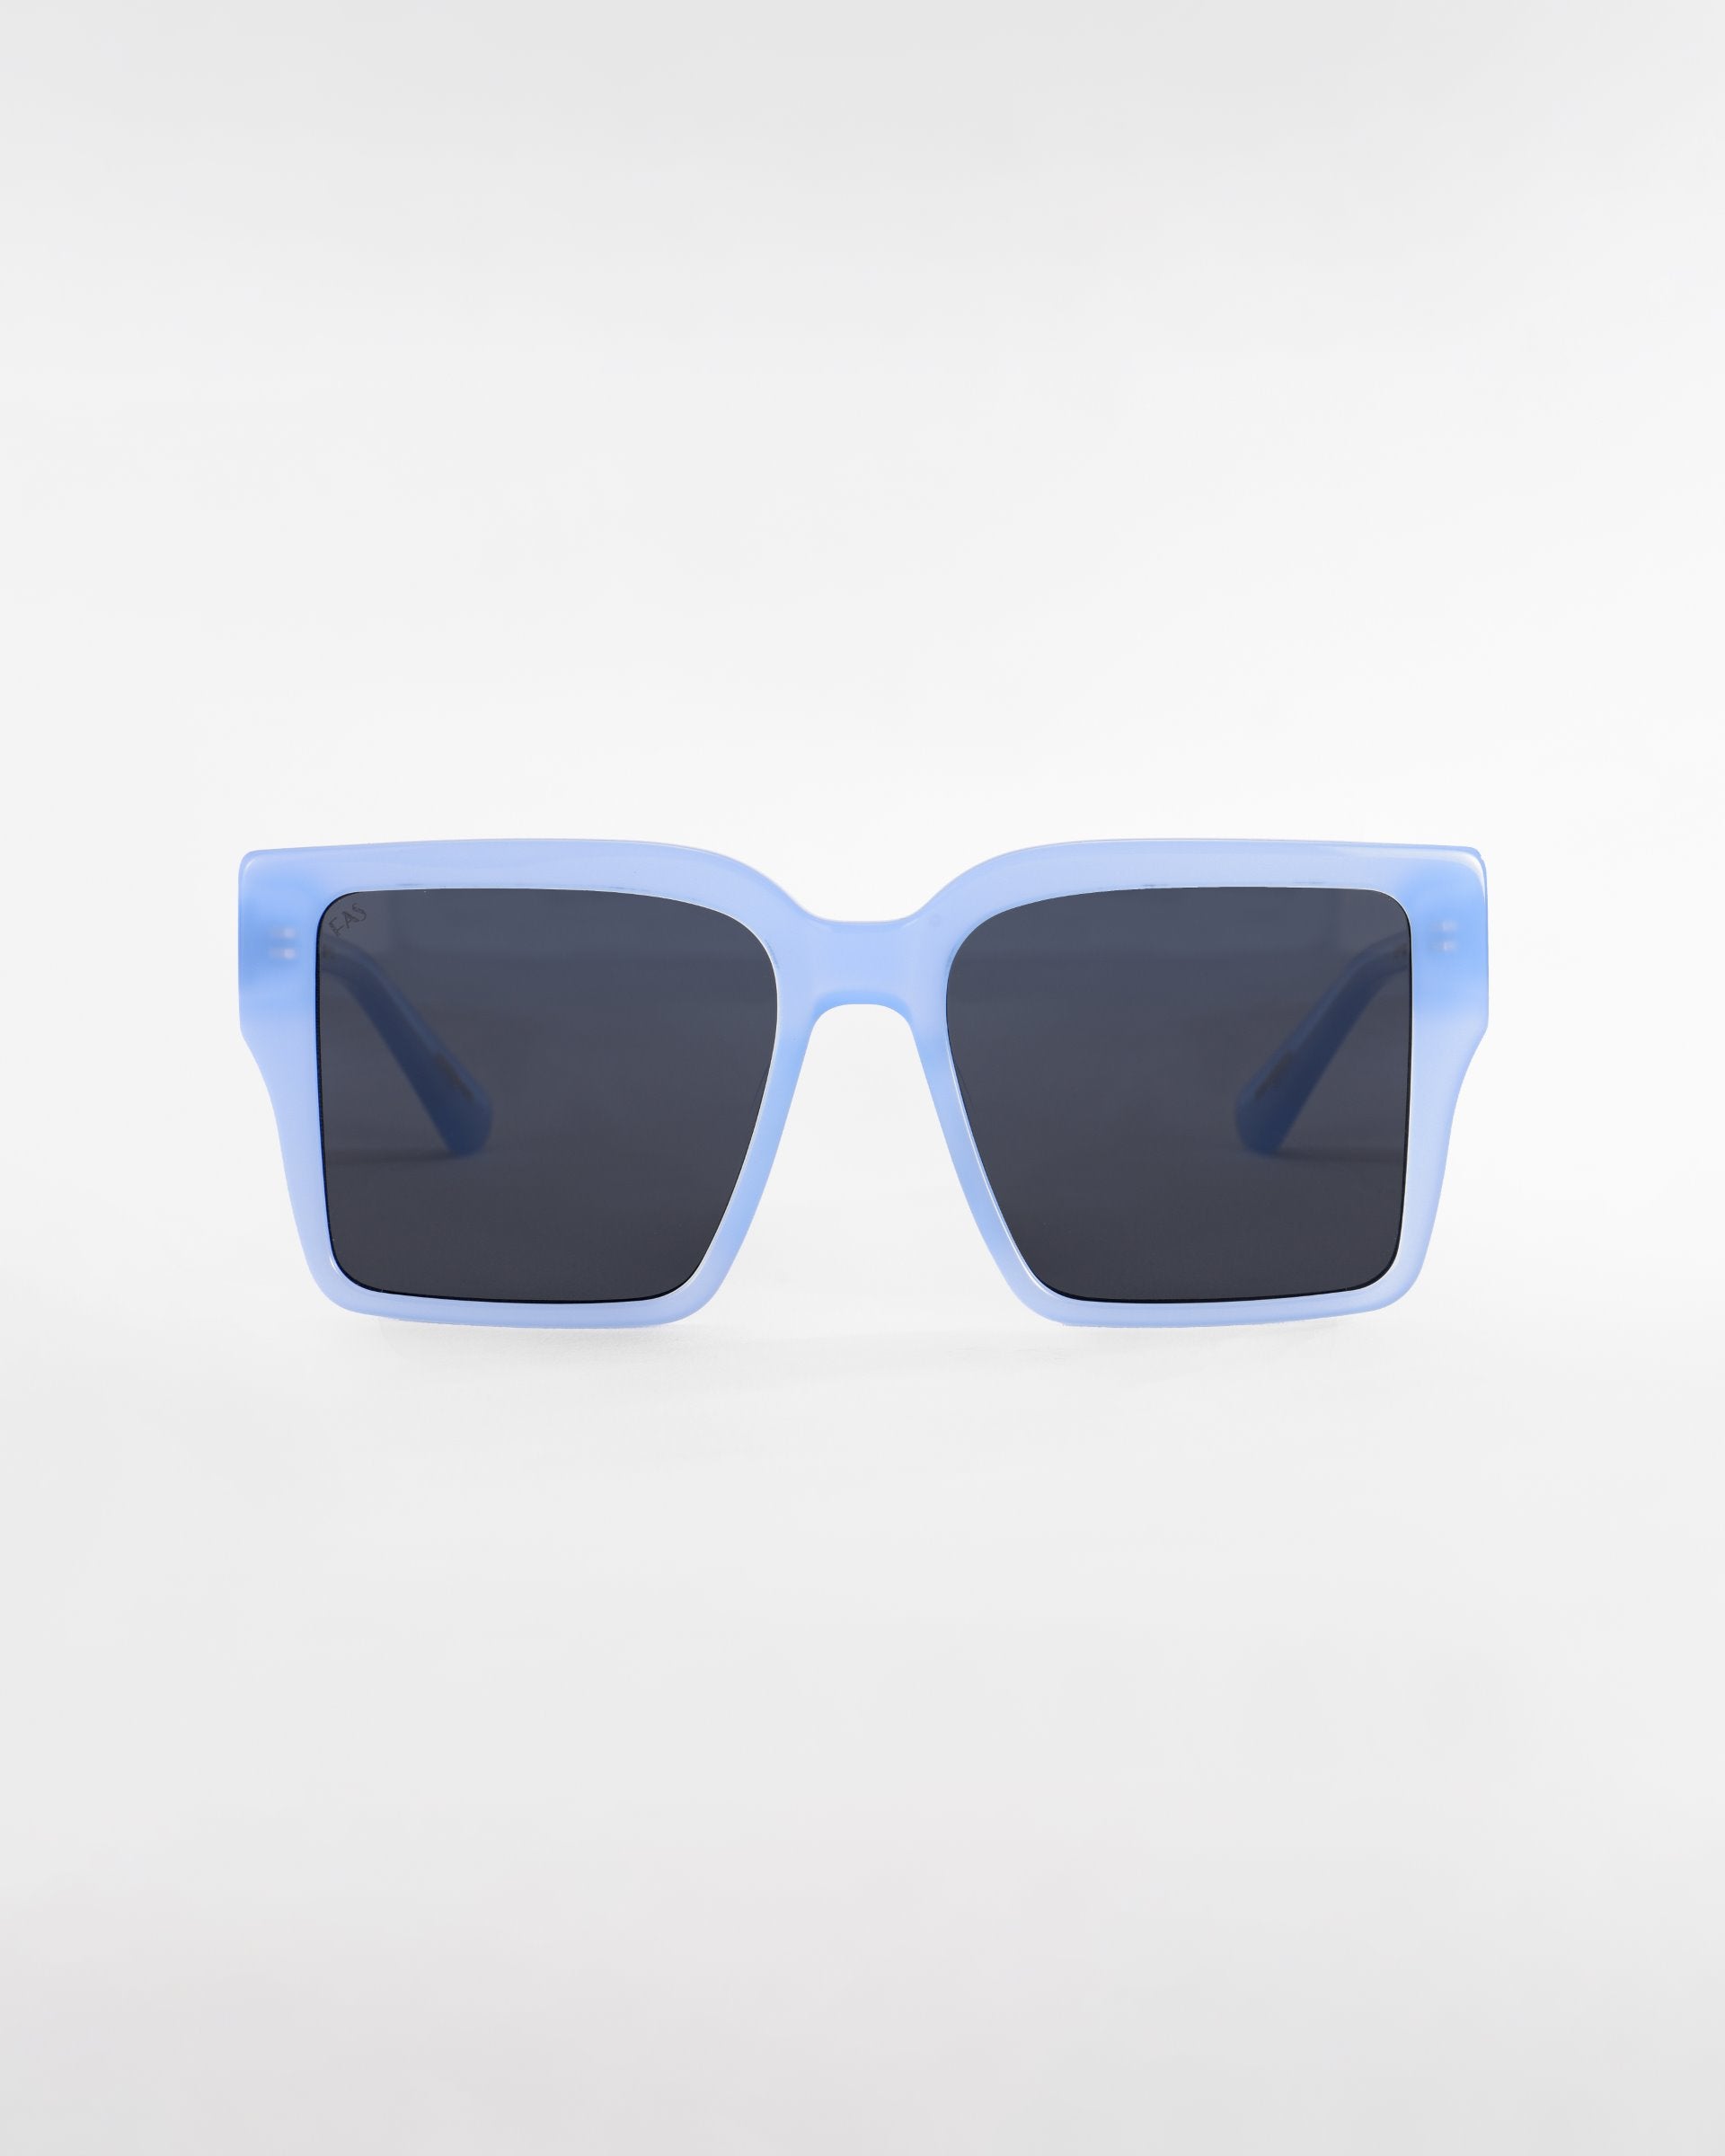 A pair of For Art&#39;s Sake® Castle oversized square-shaped sunglasses with light blue frames and ultra-lightweight dark lenses, centered against a plain white background.